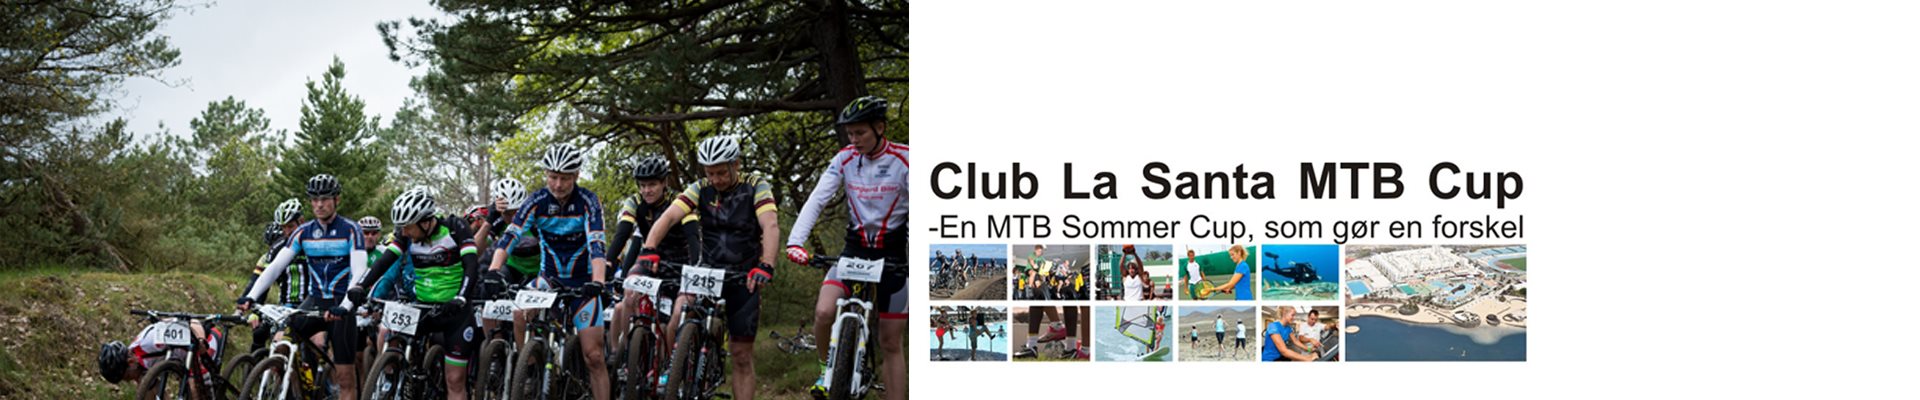 CLUB LA SANTA MTB CUP '19 - #2 Tjæreborg MTB Track